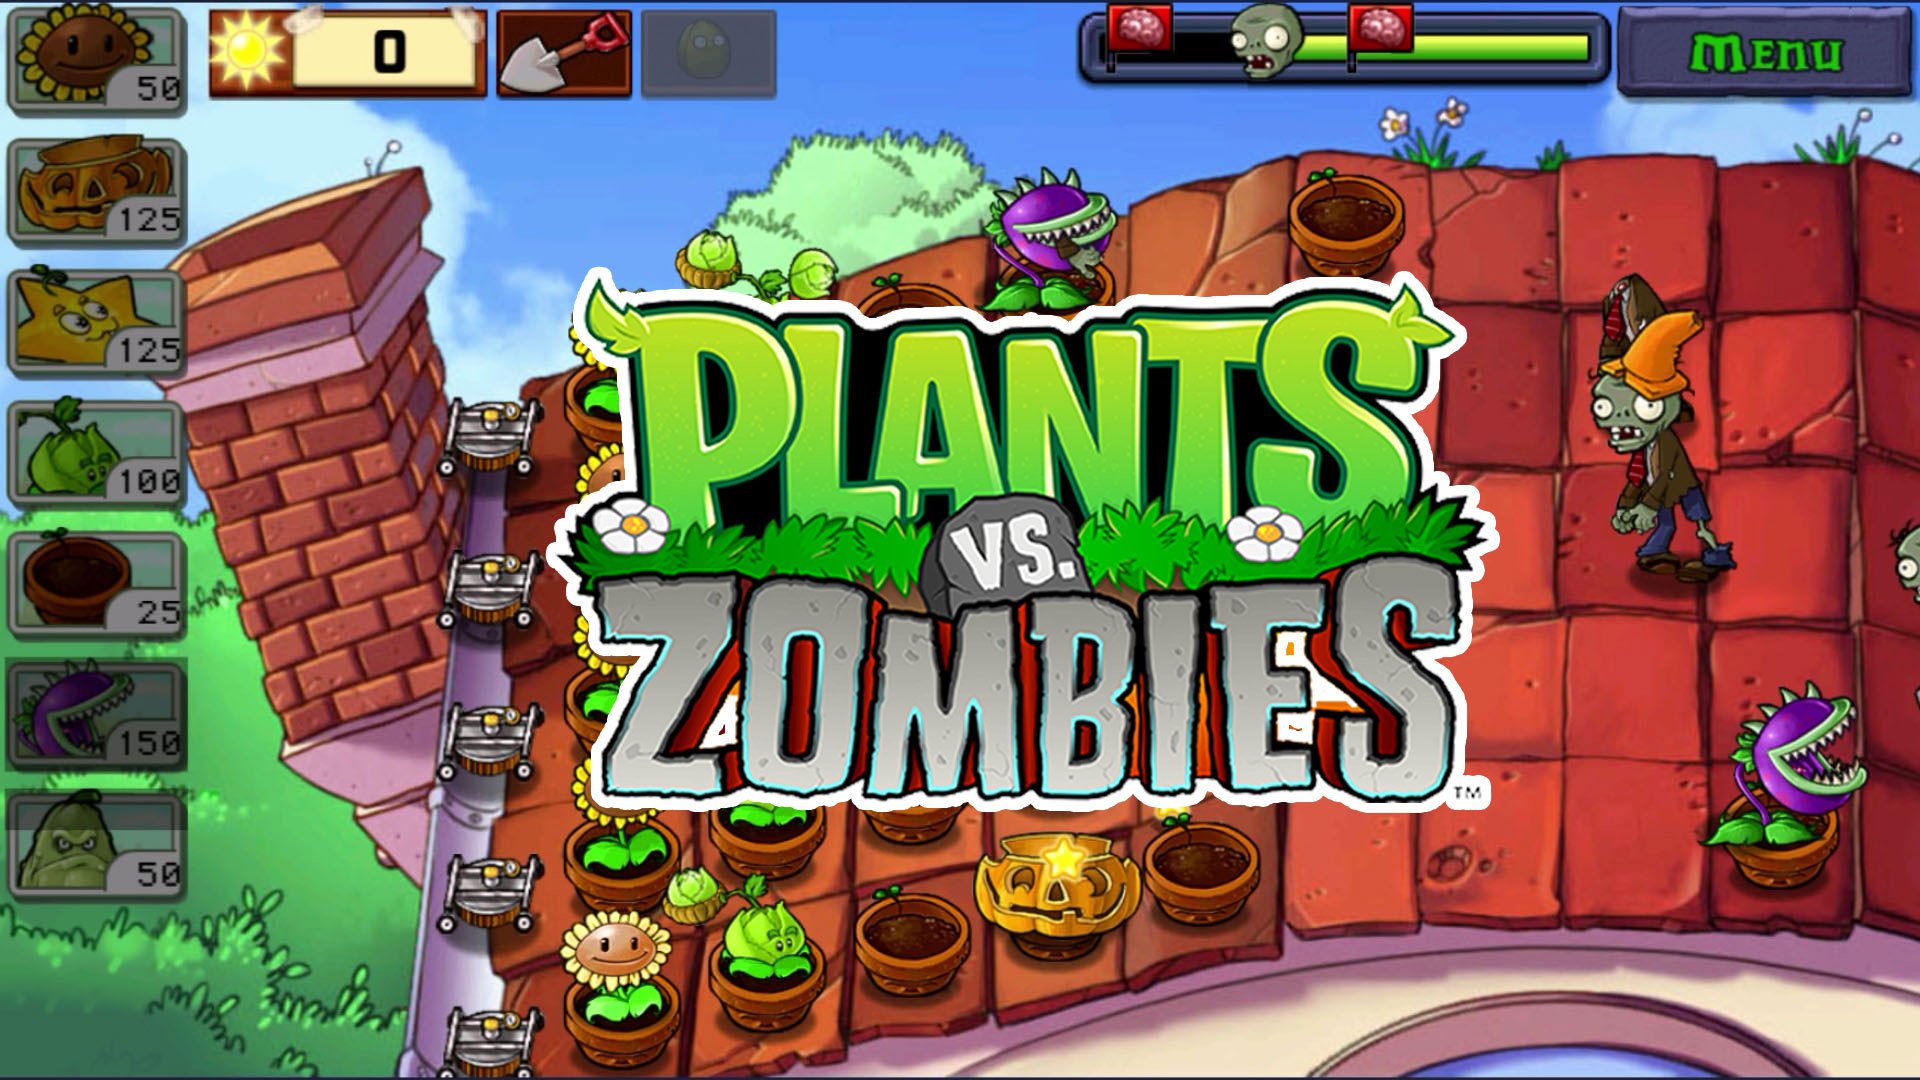 Plant vs zombie nintendo. Игра растения против зомби без регистрации. Включи игру растения против зомби. Распечатать раскраску растения против зомби растения 3 китайские.